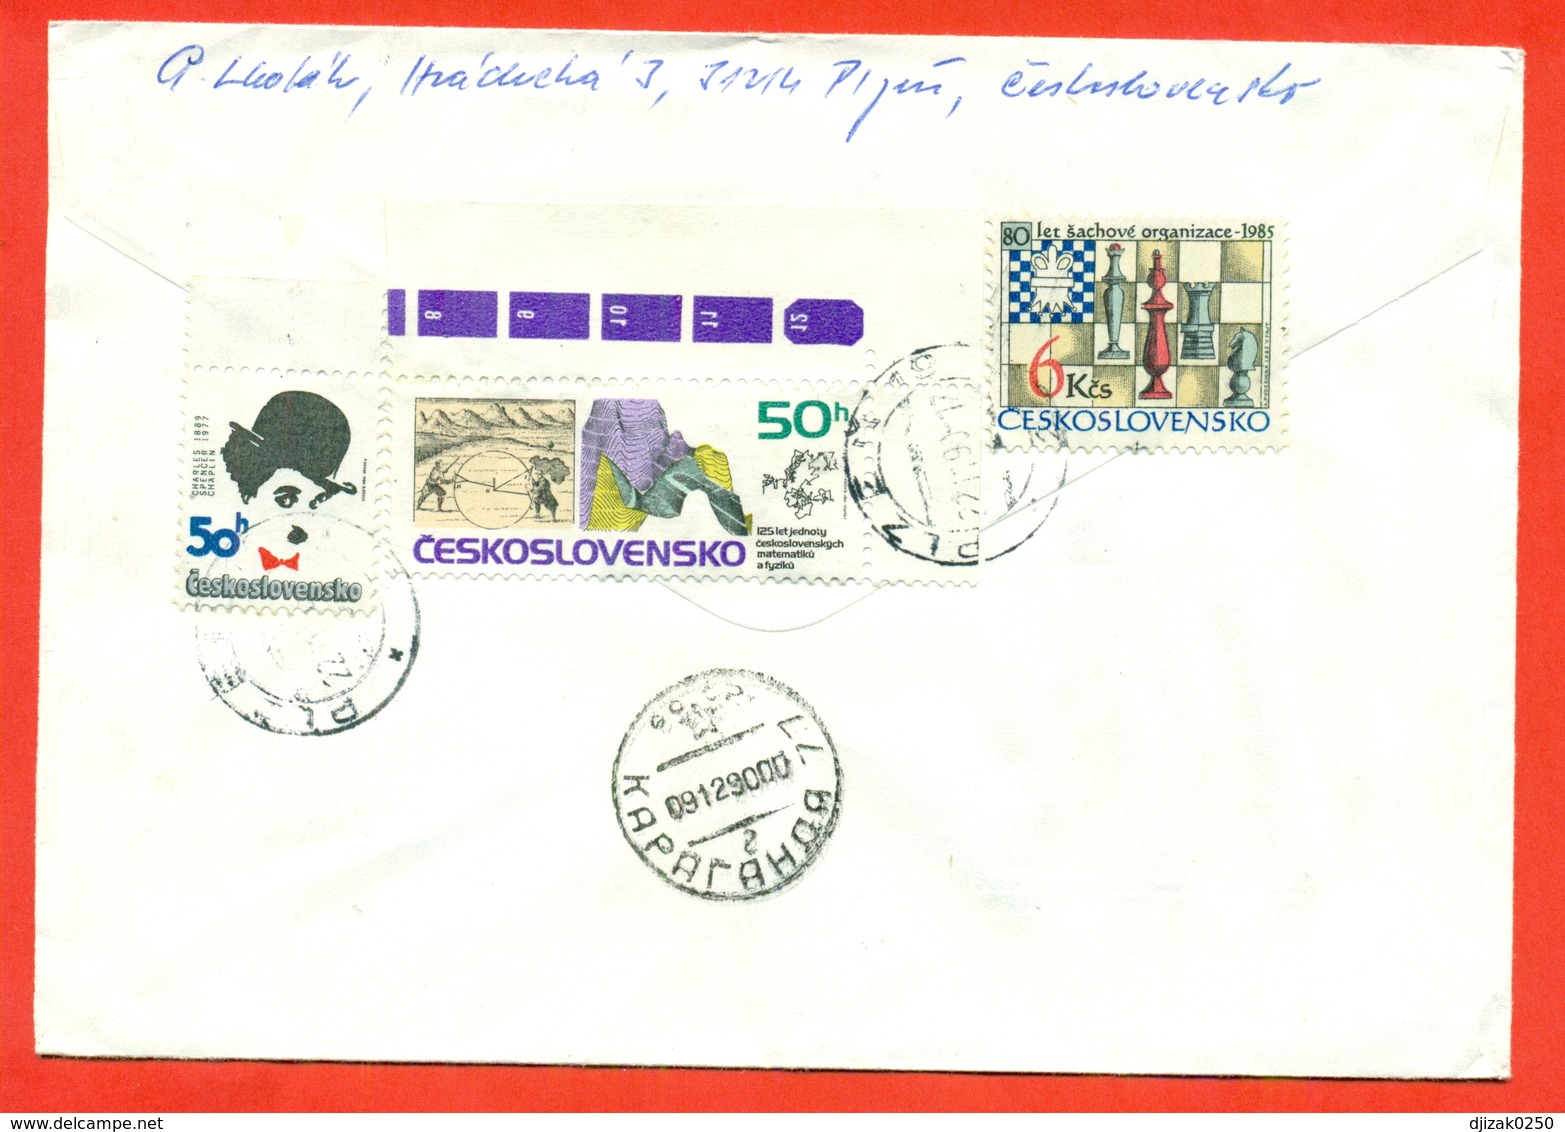 Charlie Chaplin. Czechoslovakia 1990. Registered Envelope Passed Mail. FDC. - Cinema